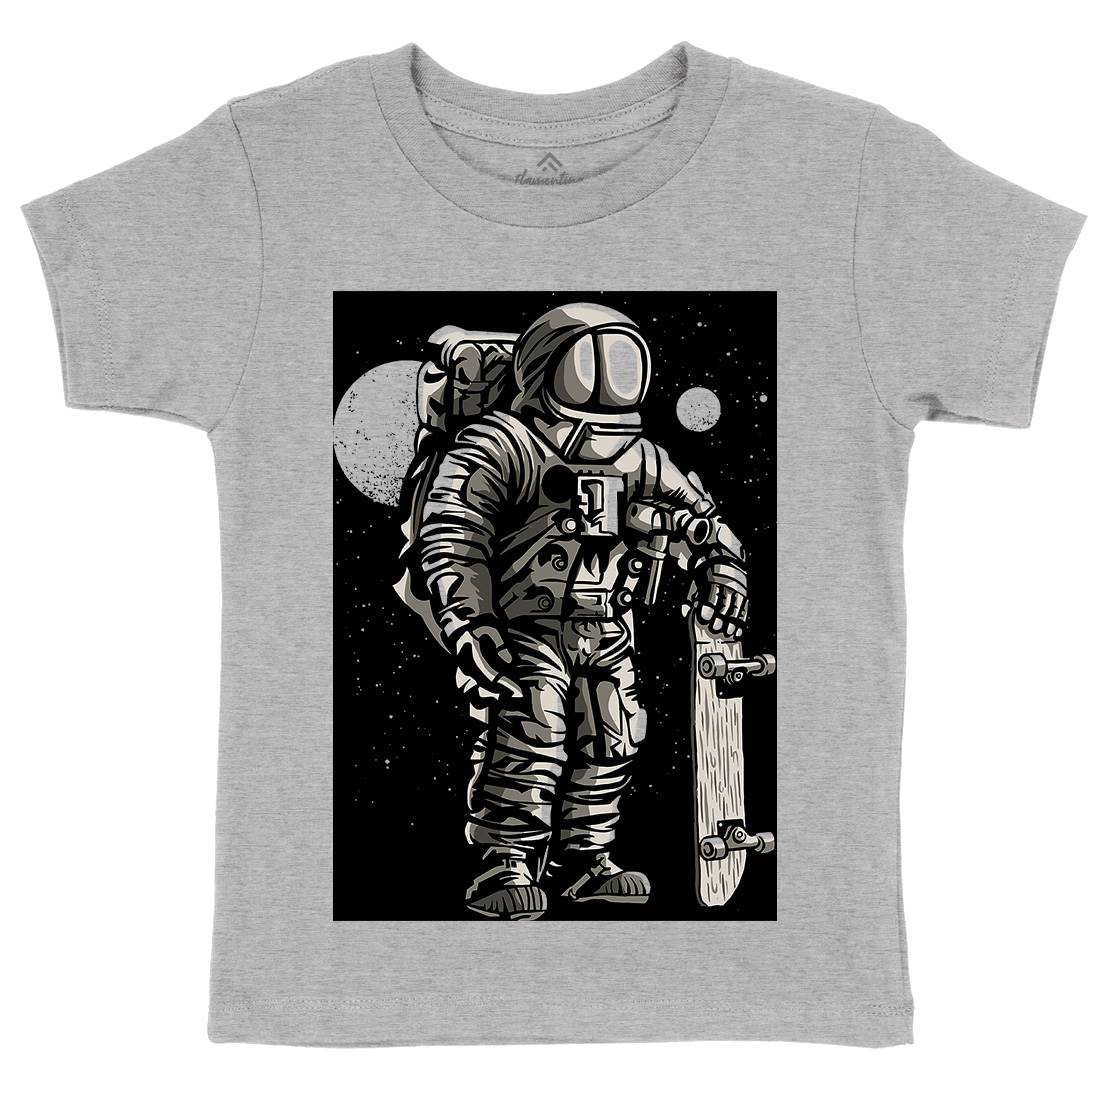 Astronaut Skater Kids Crew Neck T-Shirt Space A509